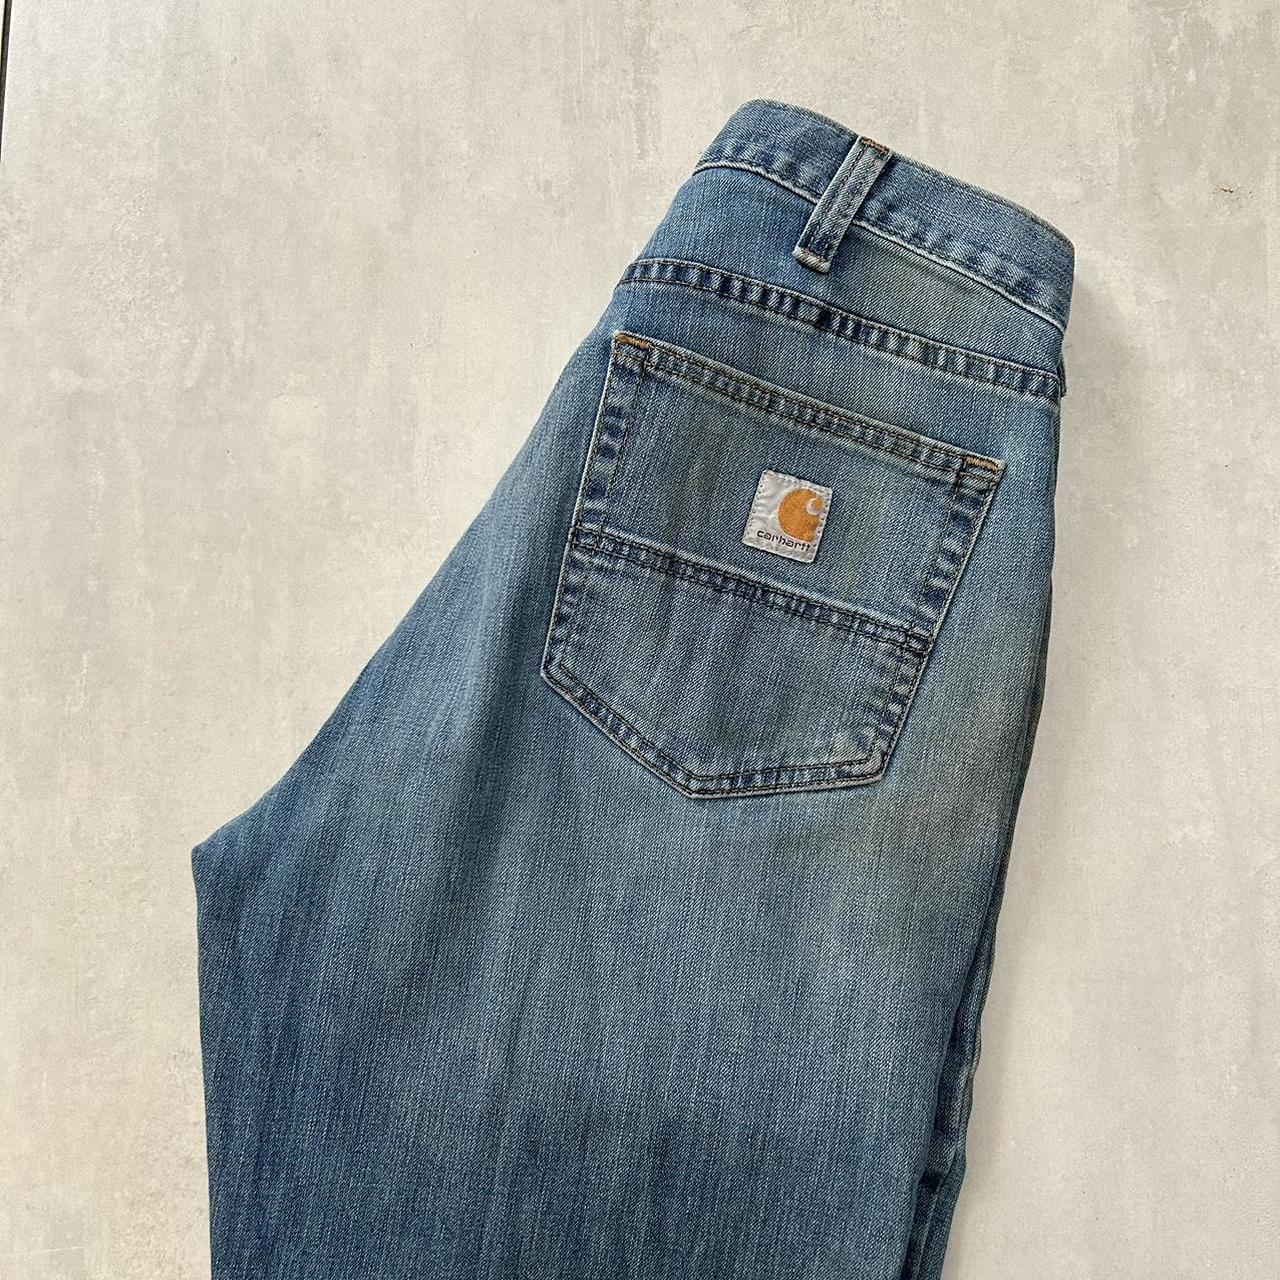 Carhartt Jeans Condition - some faint... - Depop